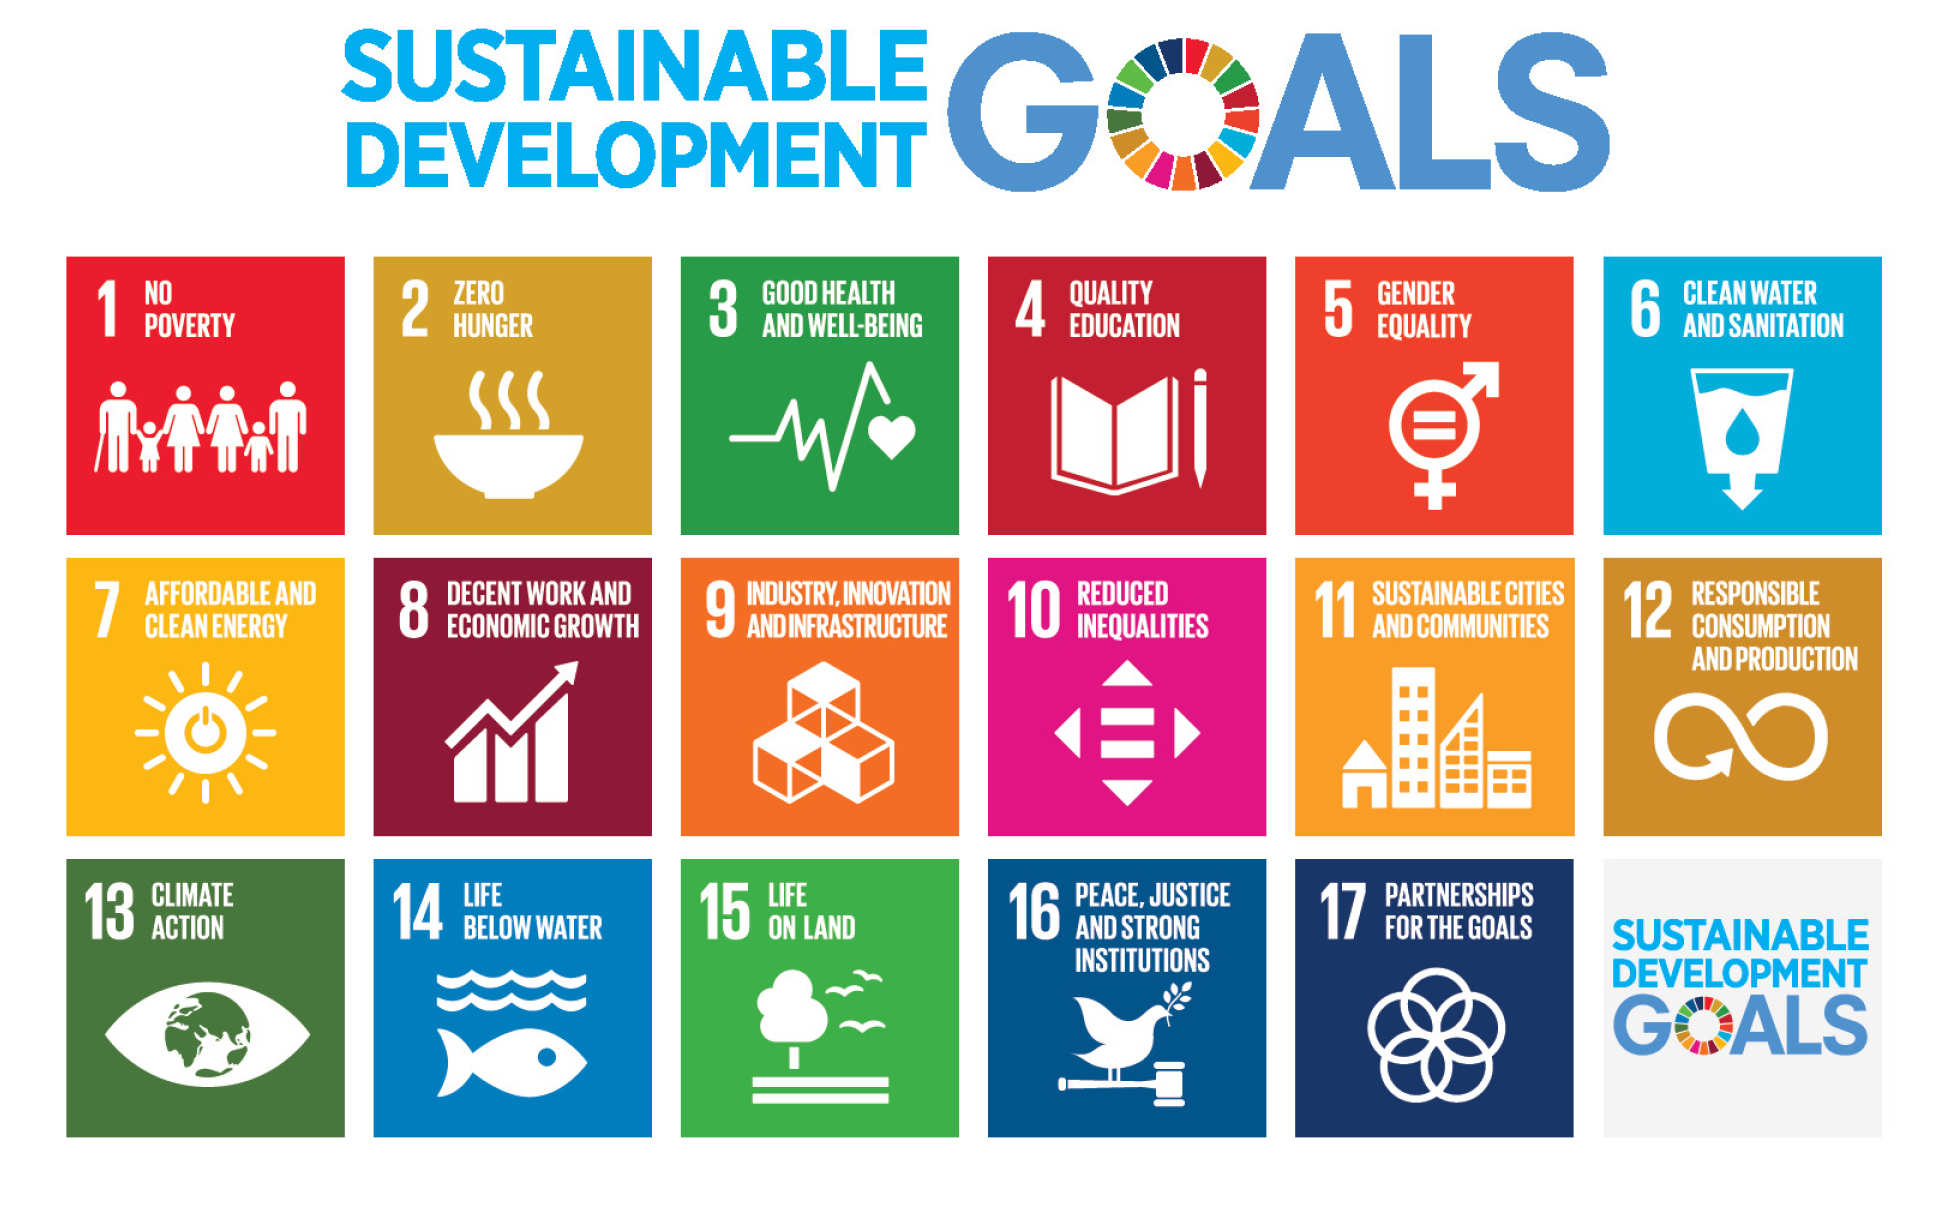 The UNESCO 17 Sustainable Development Goals infographic